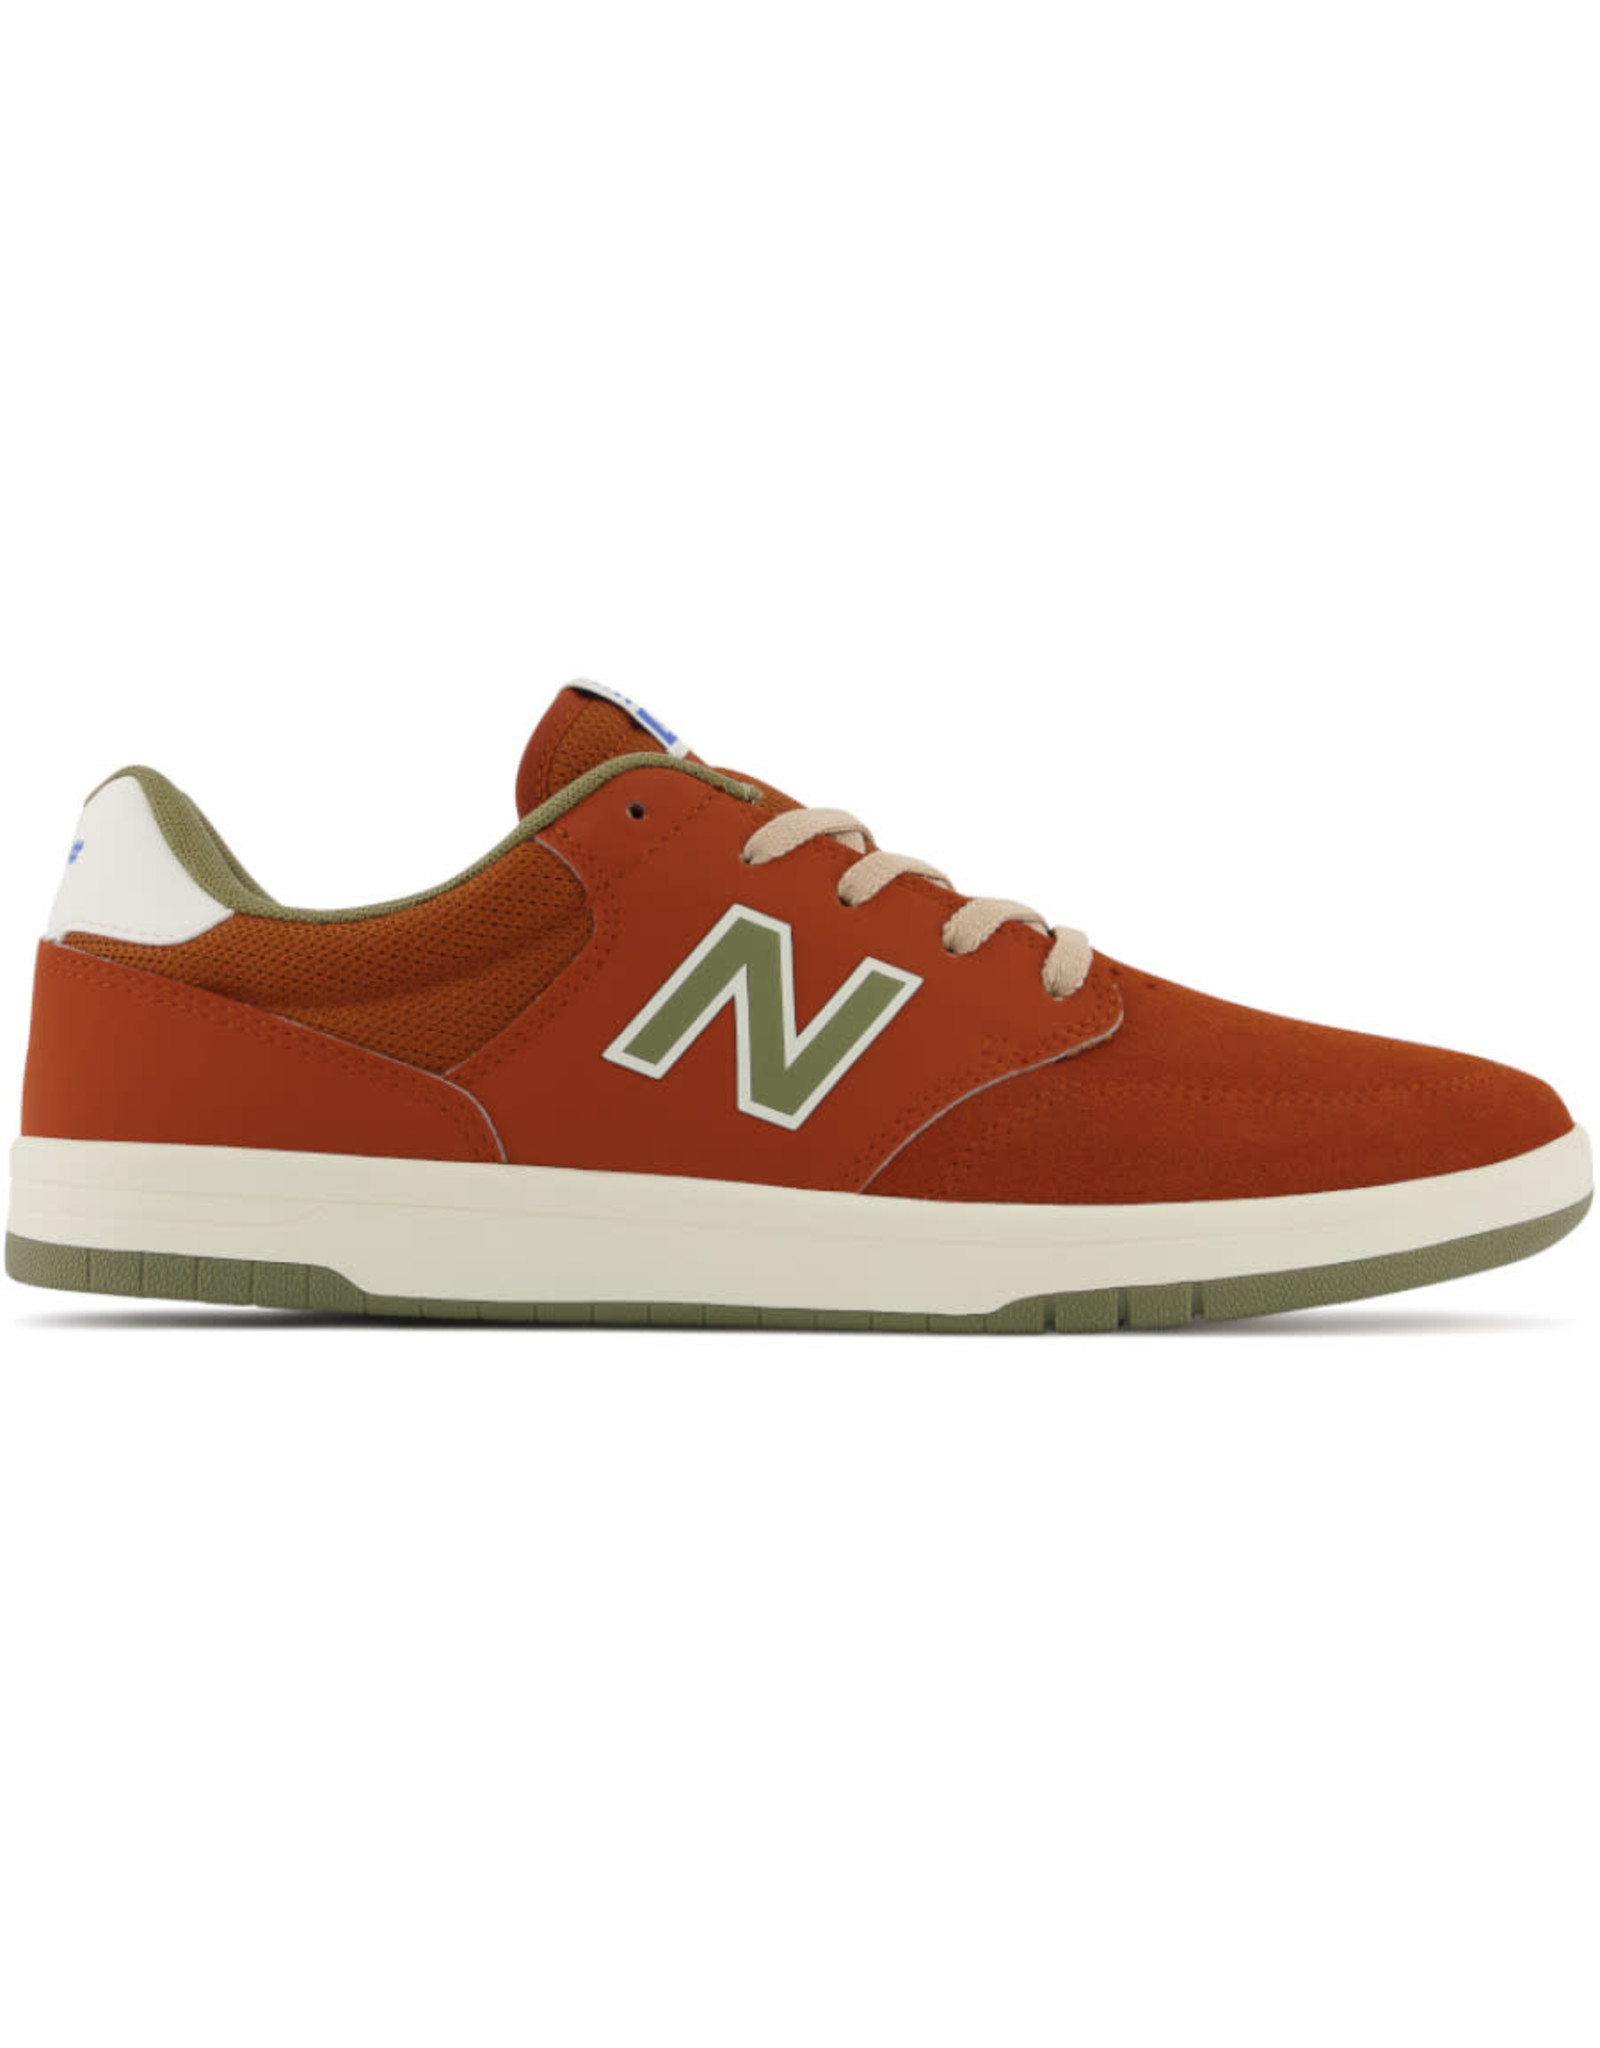 New Balance Numeric New Balance Numeric Shoe 425 (Rust/White)